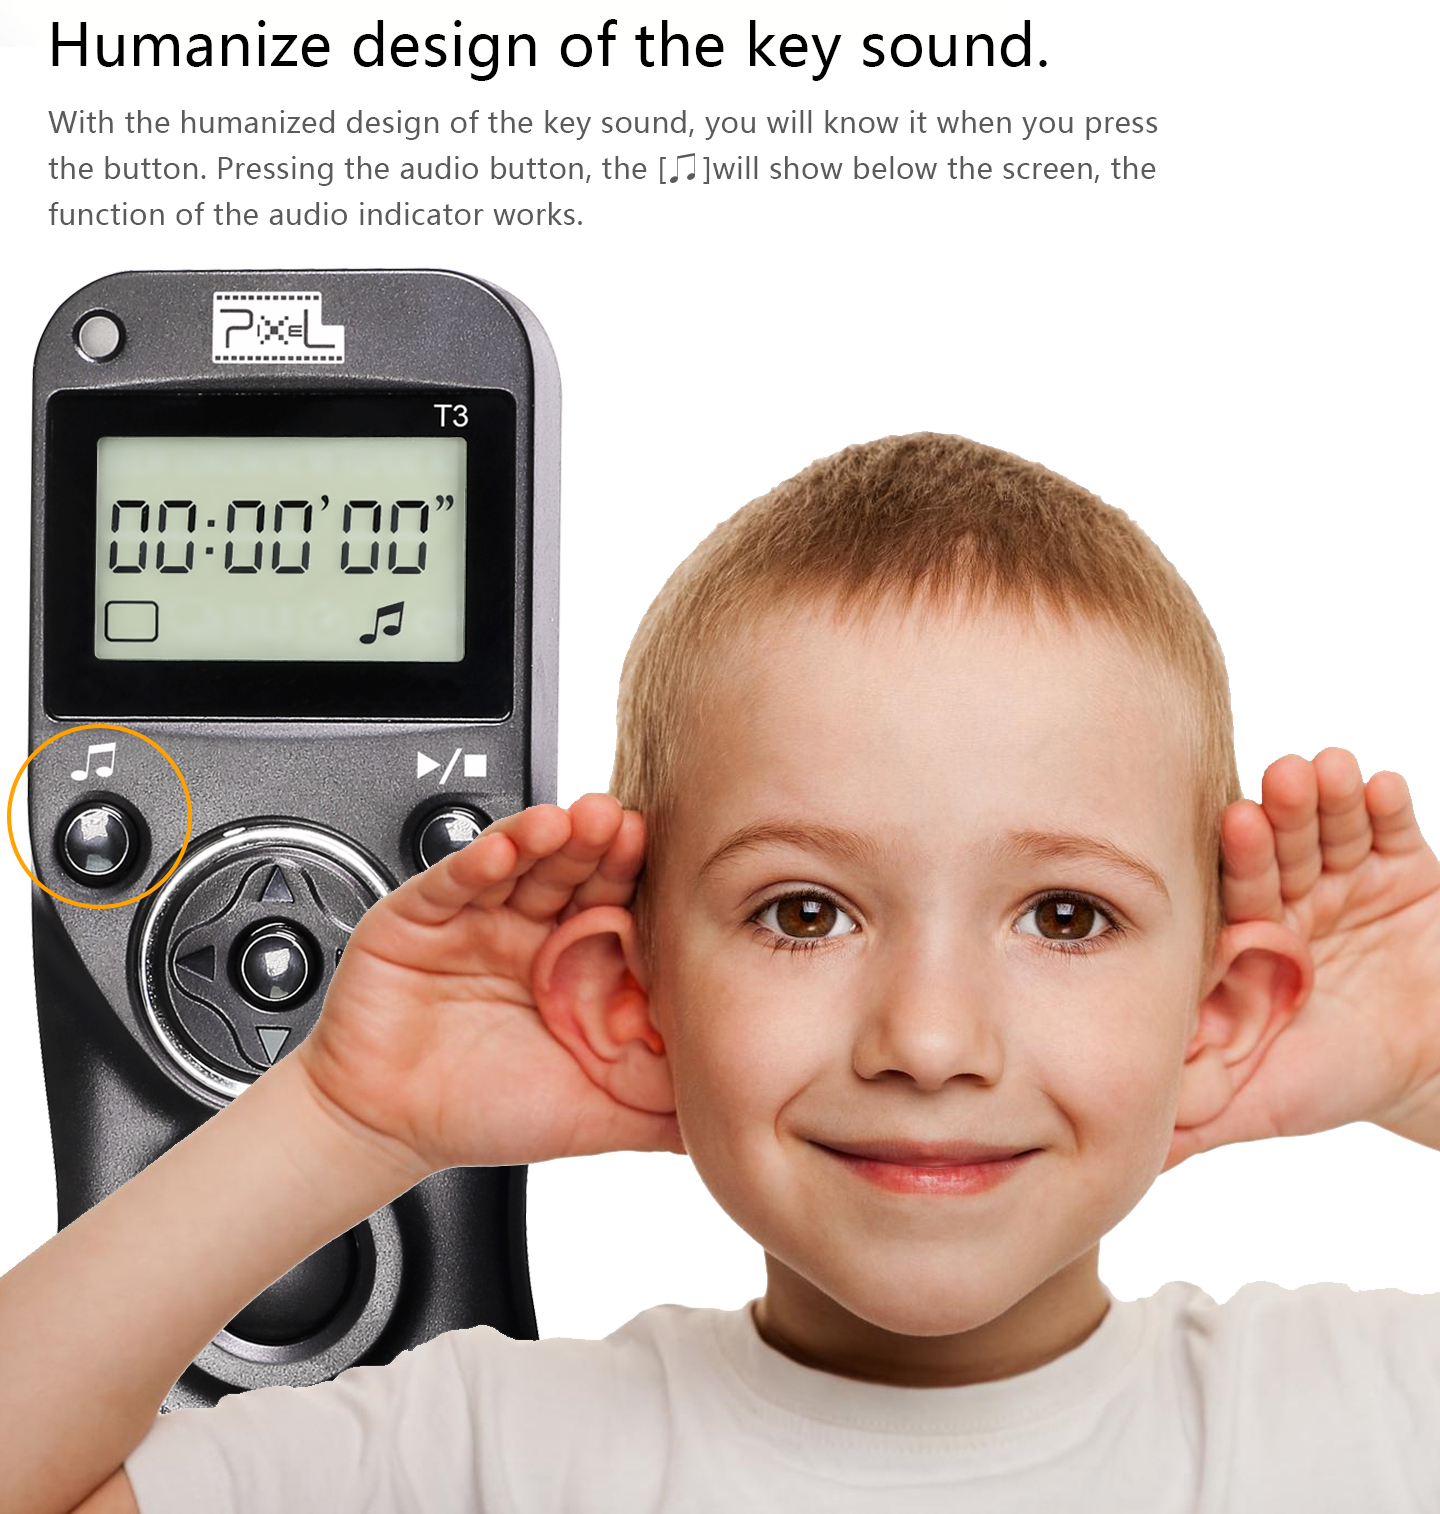 Humanize design of the key sound